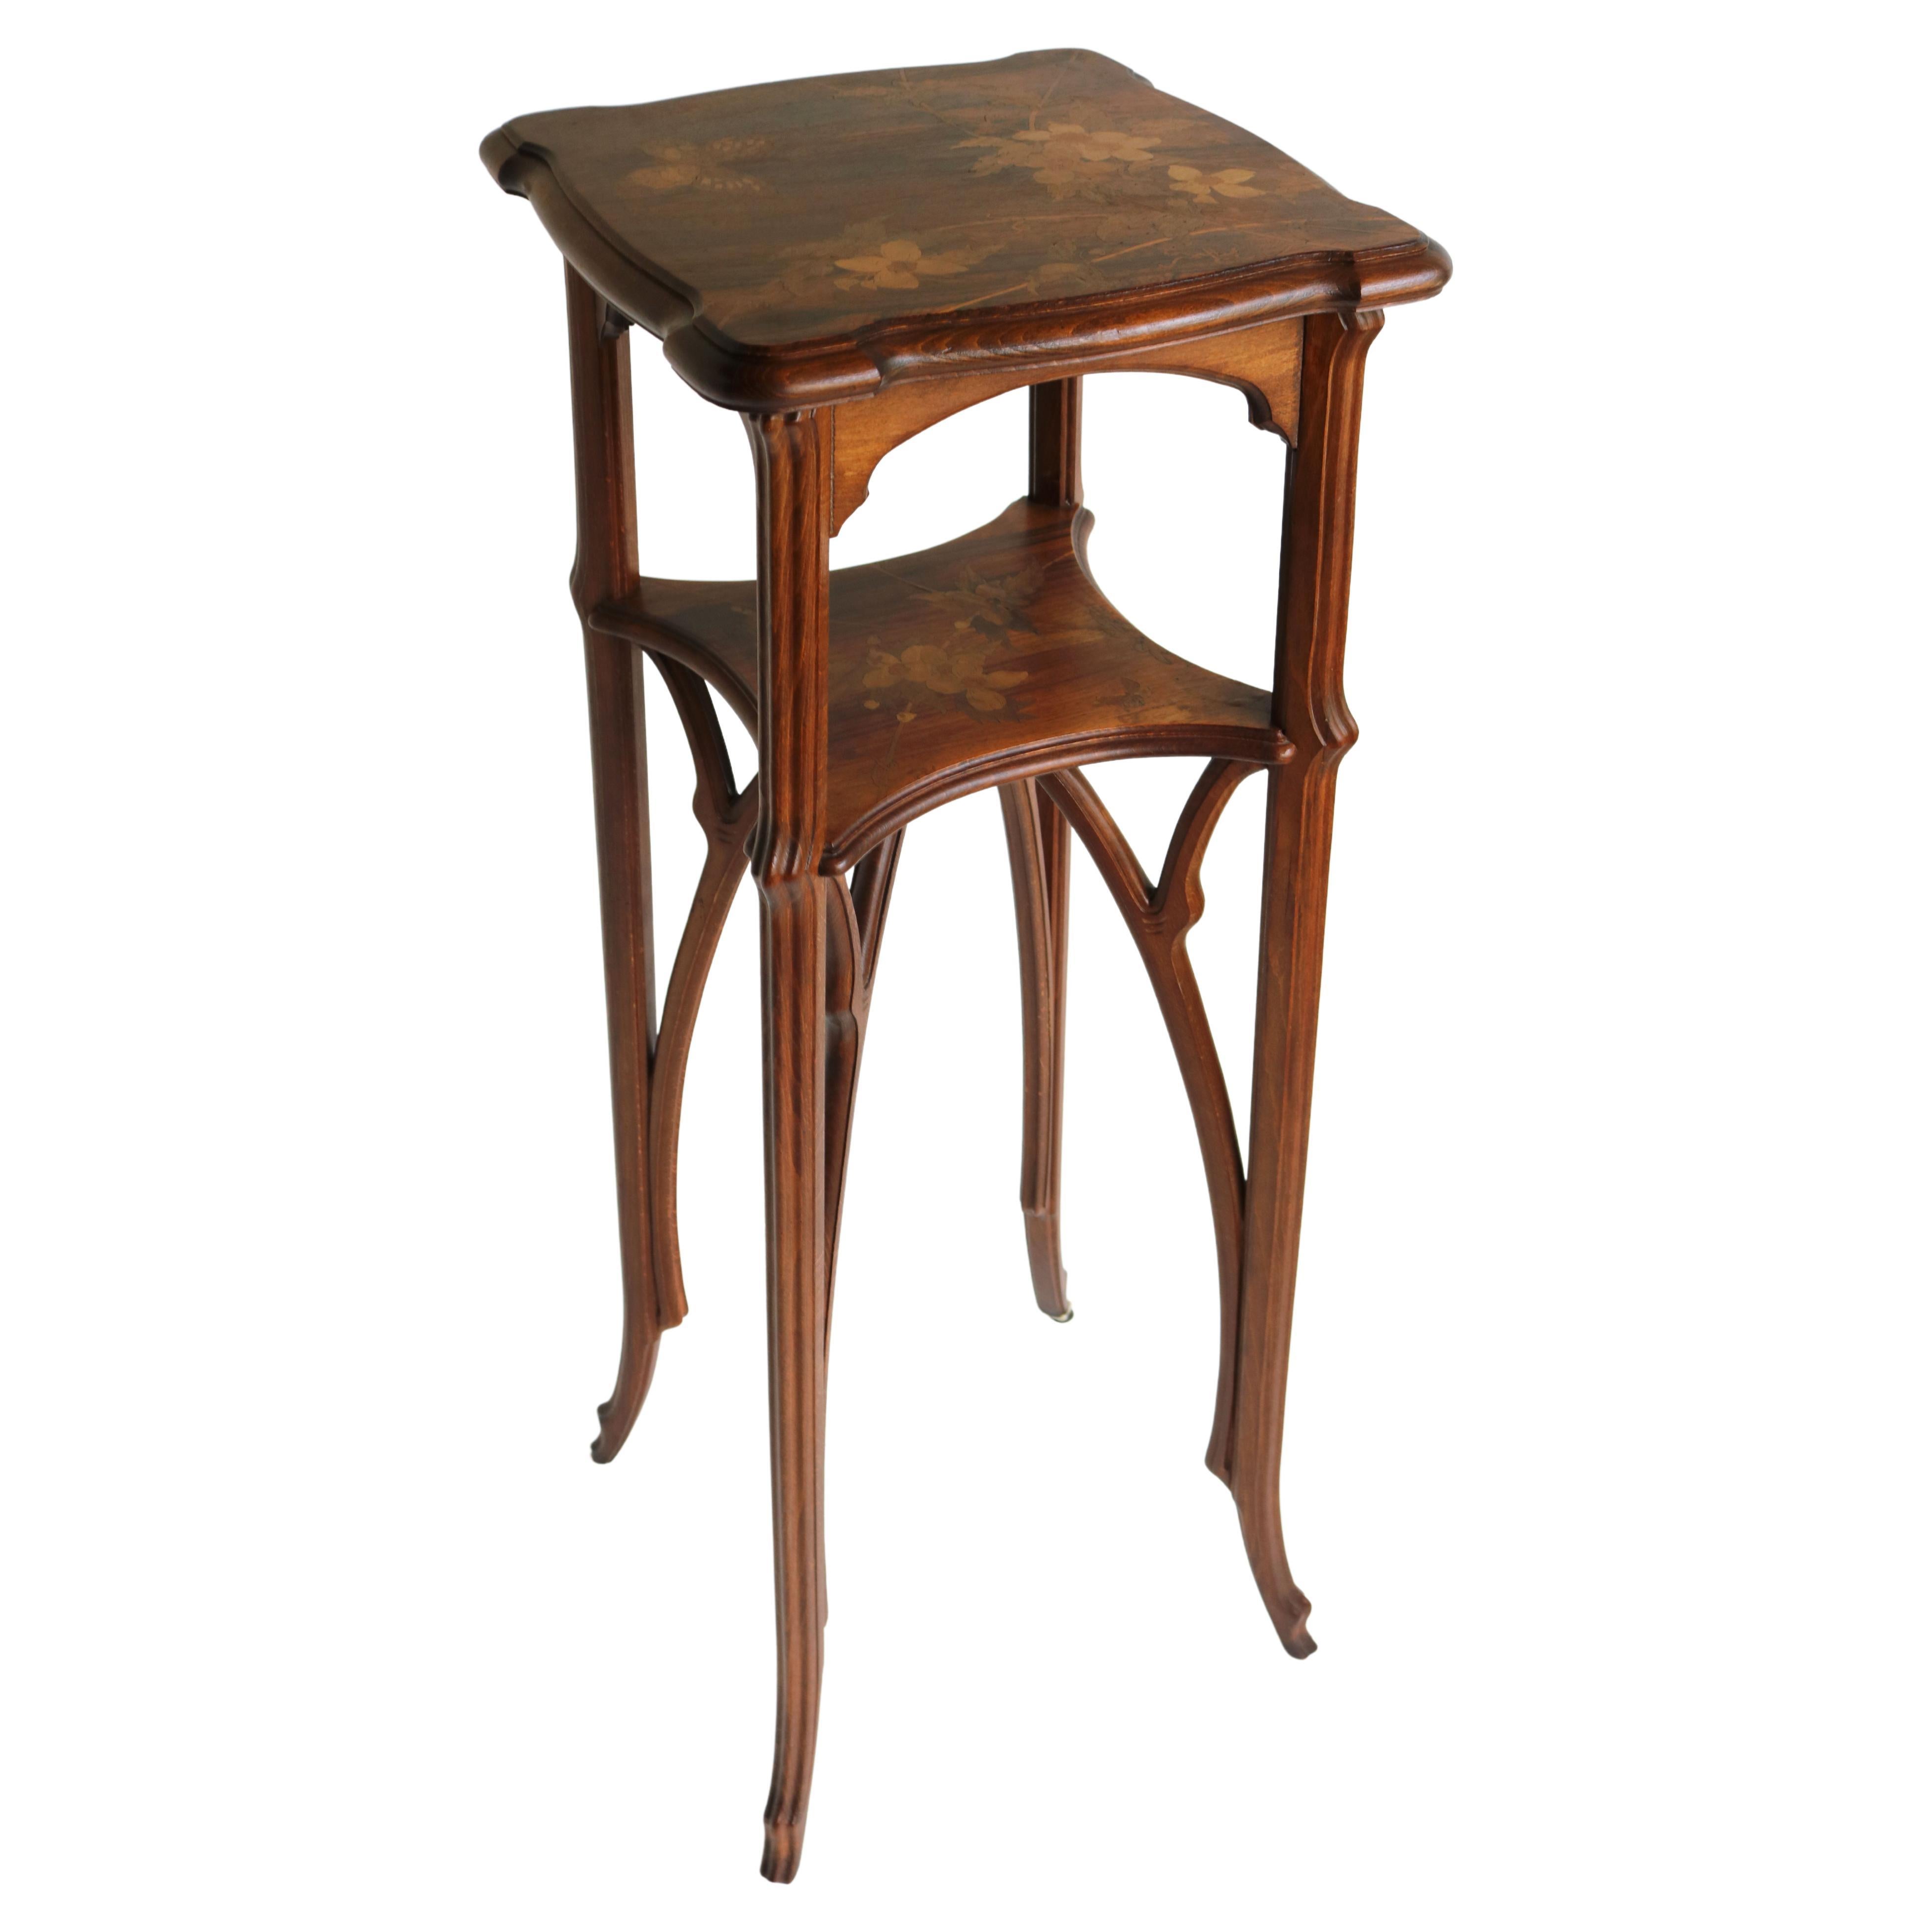 Original Art Nouveau Pedestal by Emile Galle 1890 French Antique Inlaid Table For Sale